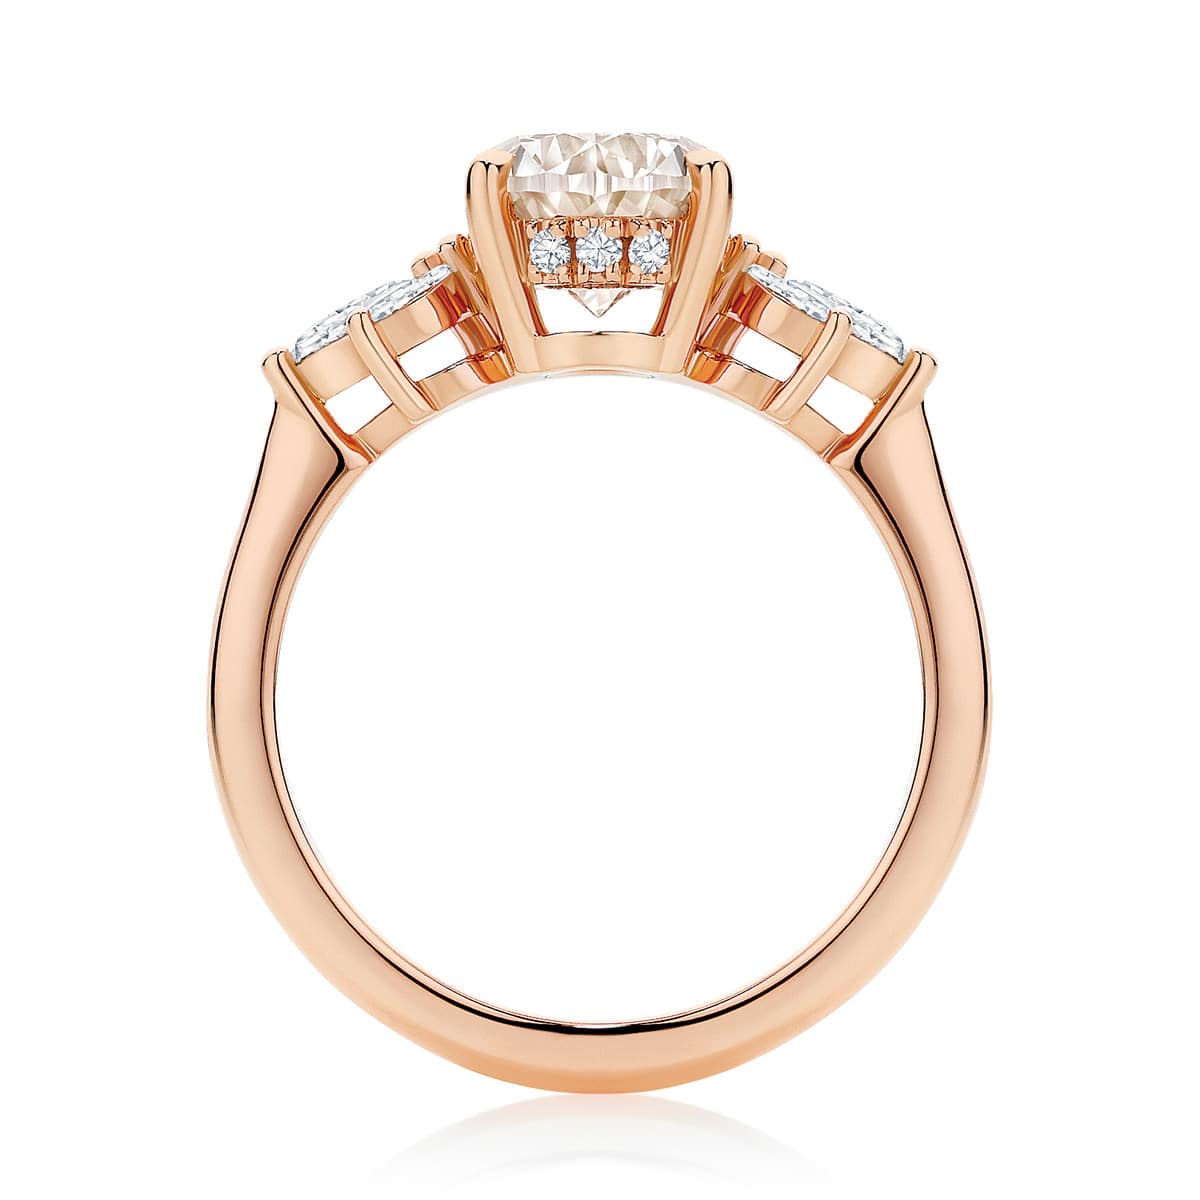 Lyra – The Bachelor Engagement Ring 2021